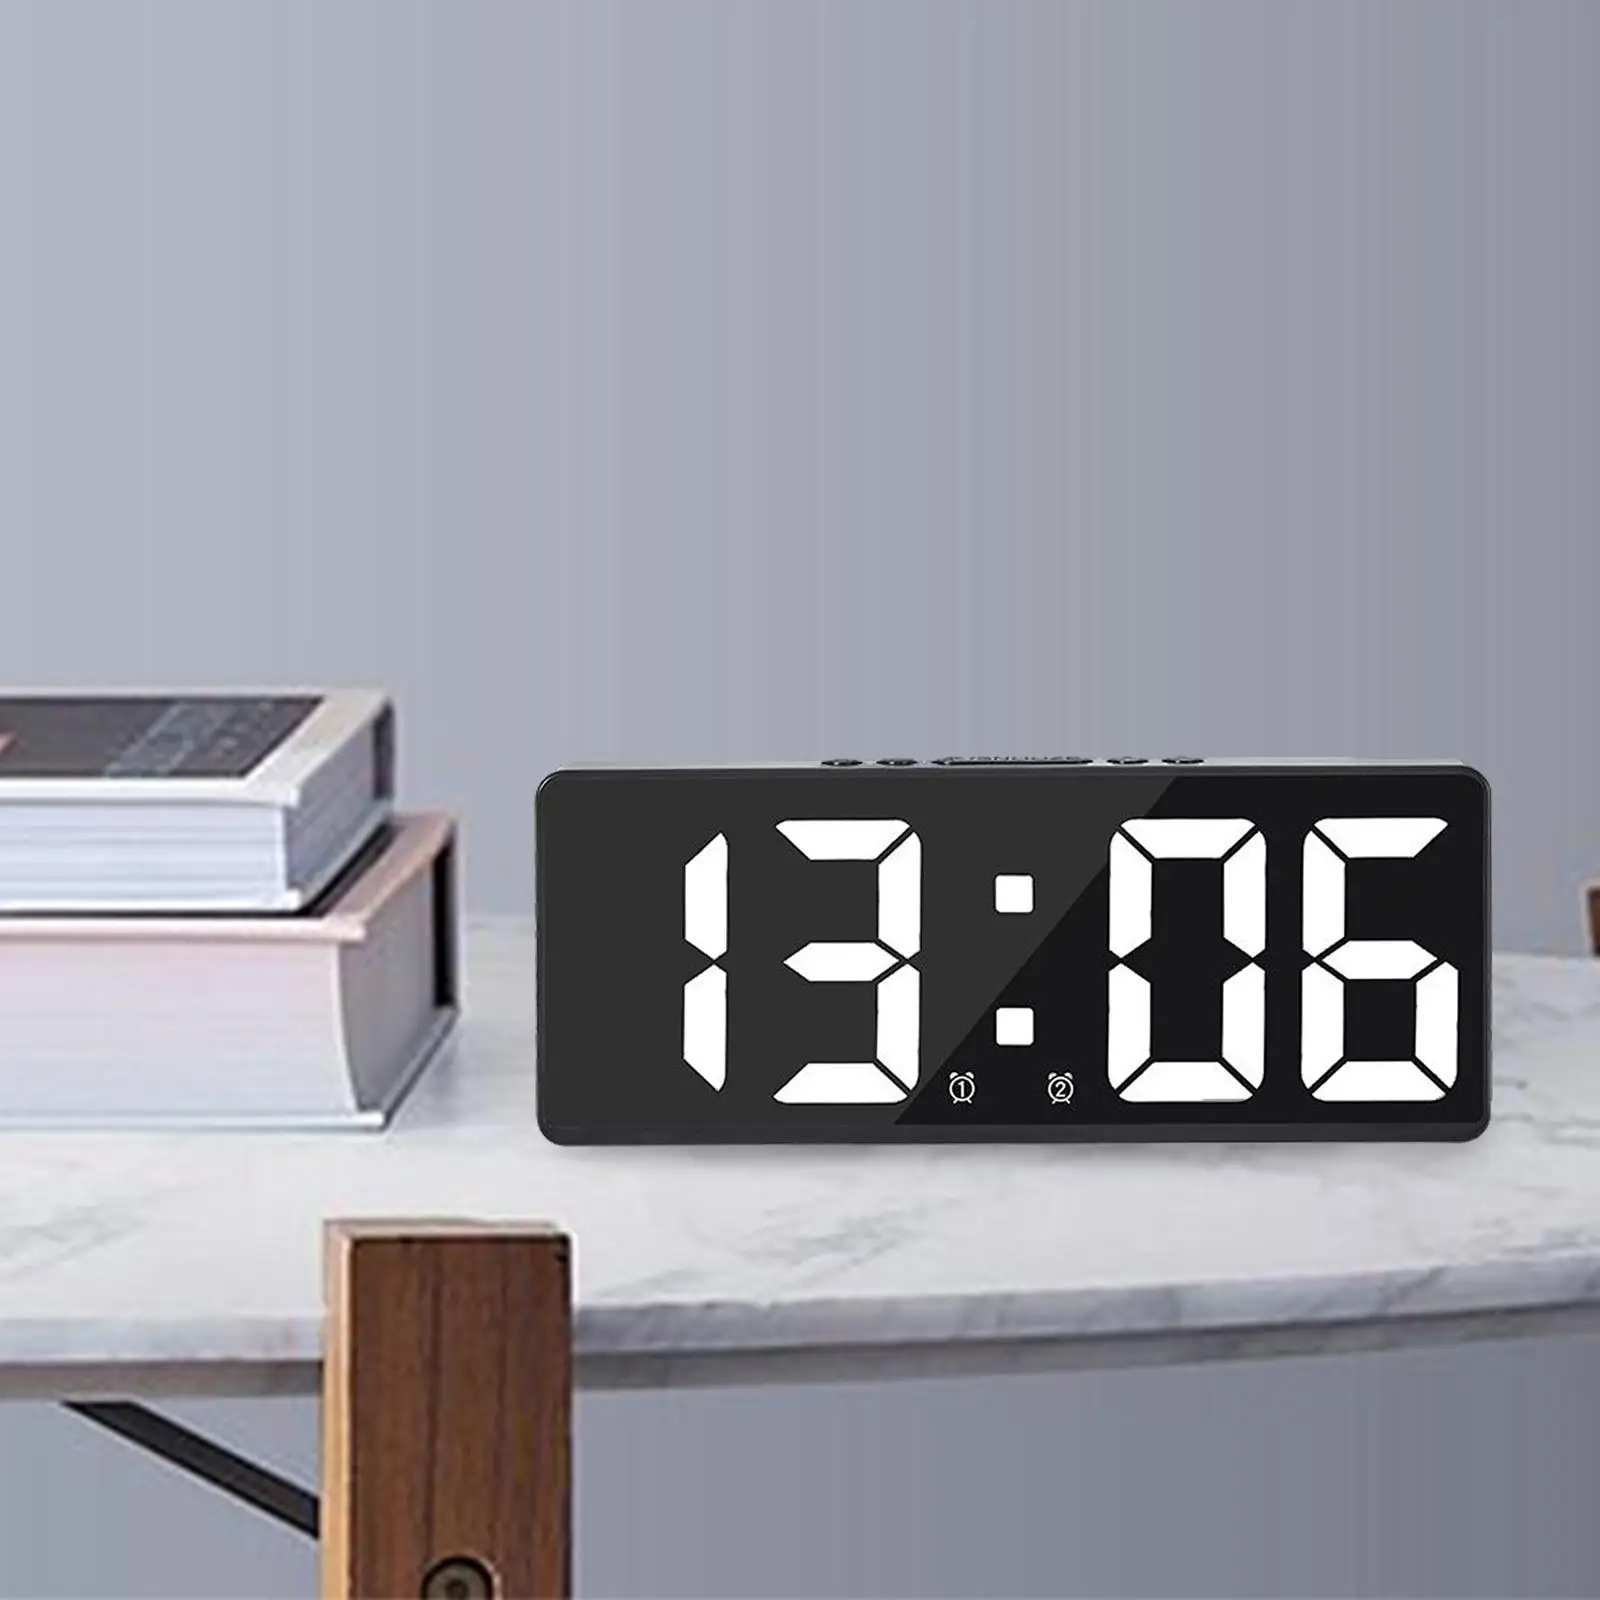 Digital Alarm Clock Table Large LED Display USB Charger Calendar Voice Control